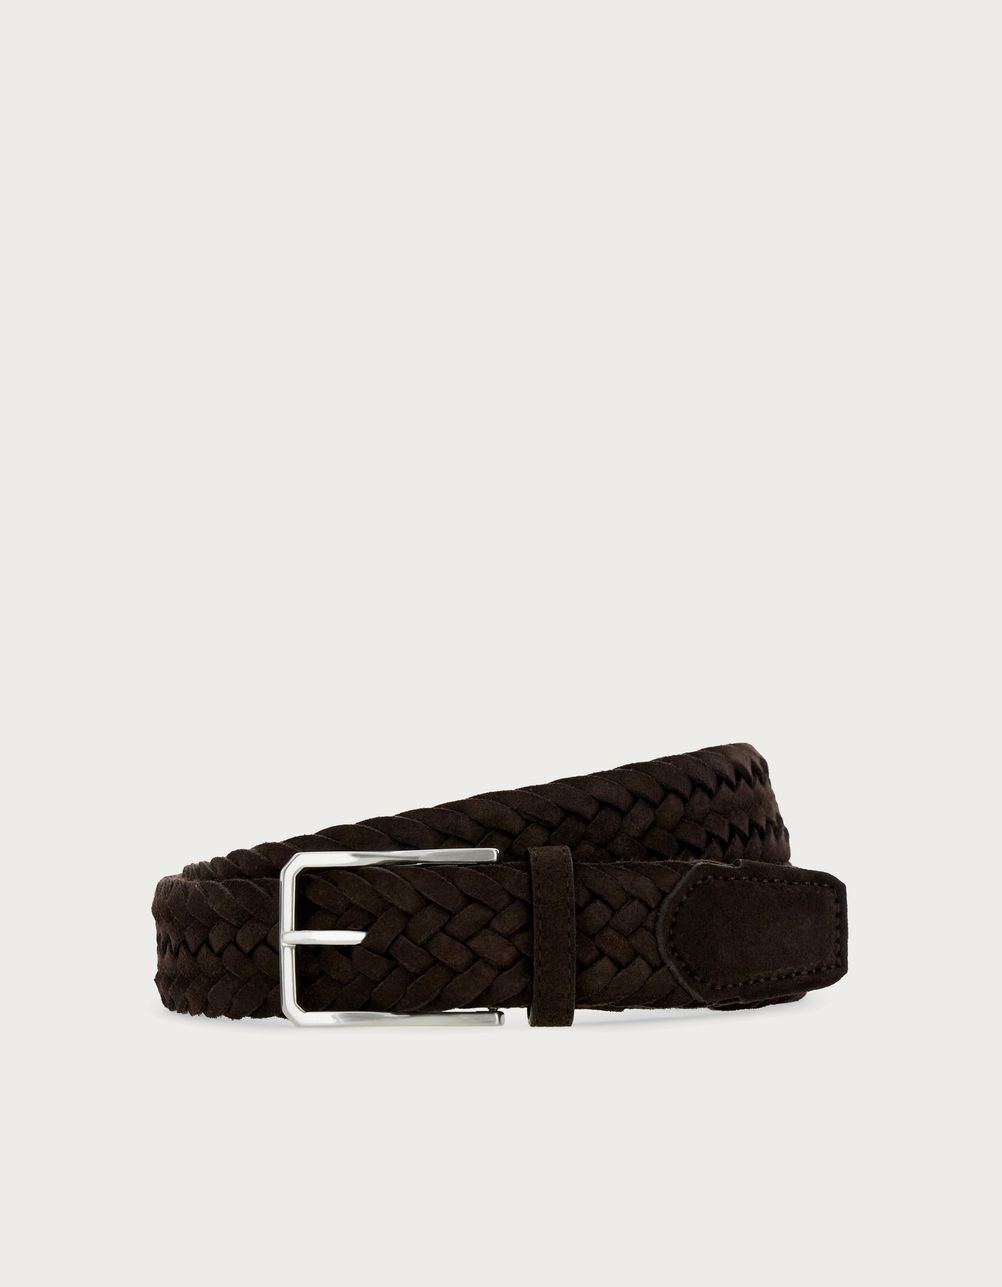 Dark brown suede calfskin woven belt